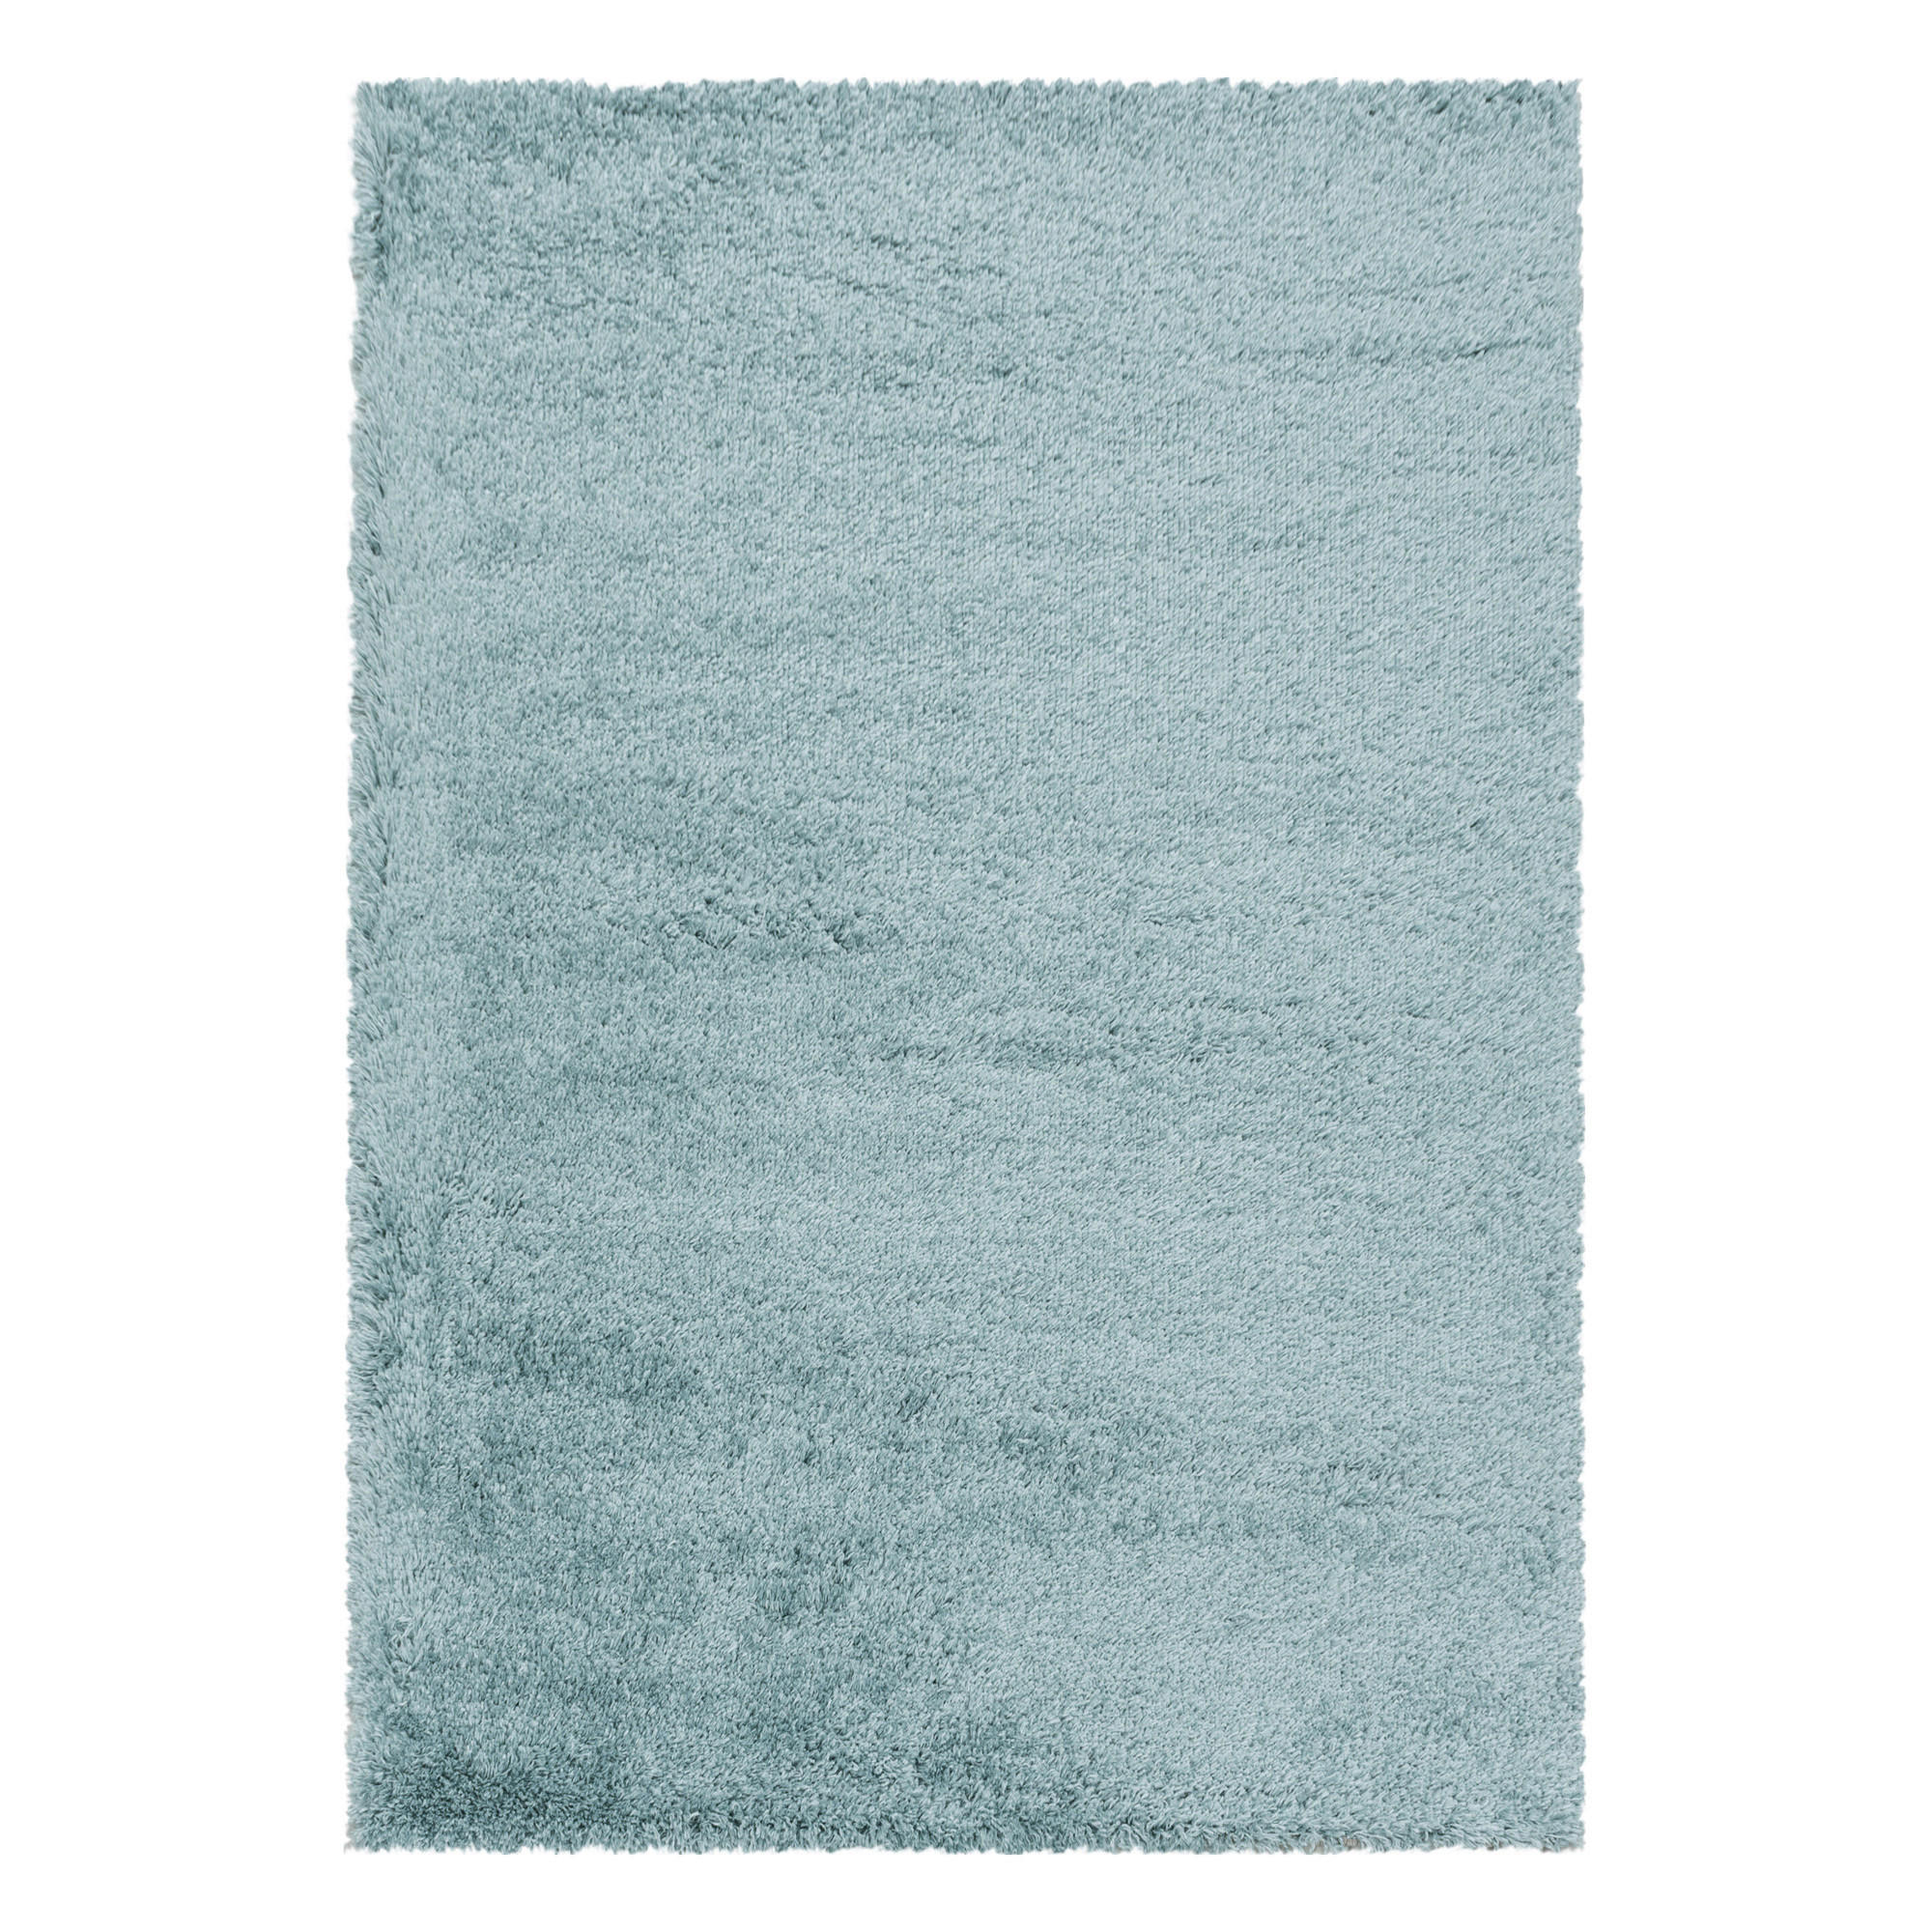 HOCHFLORTEPPICH  60/110 cm  gewebt  Blau   - Blau, Basics, Textil (60/110cm) - Novel